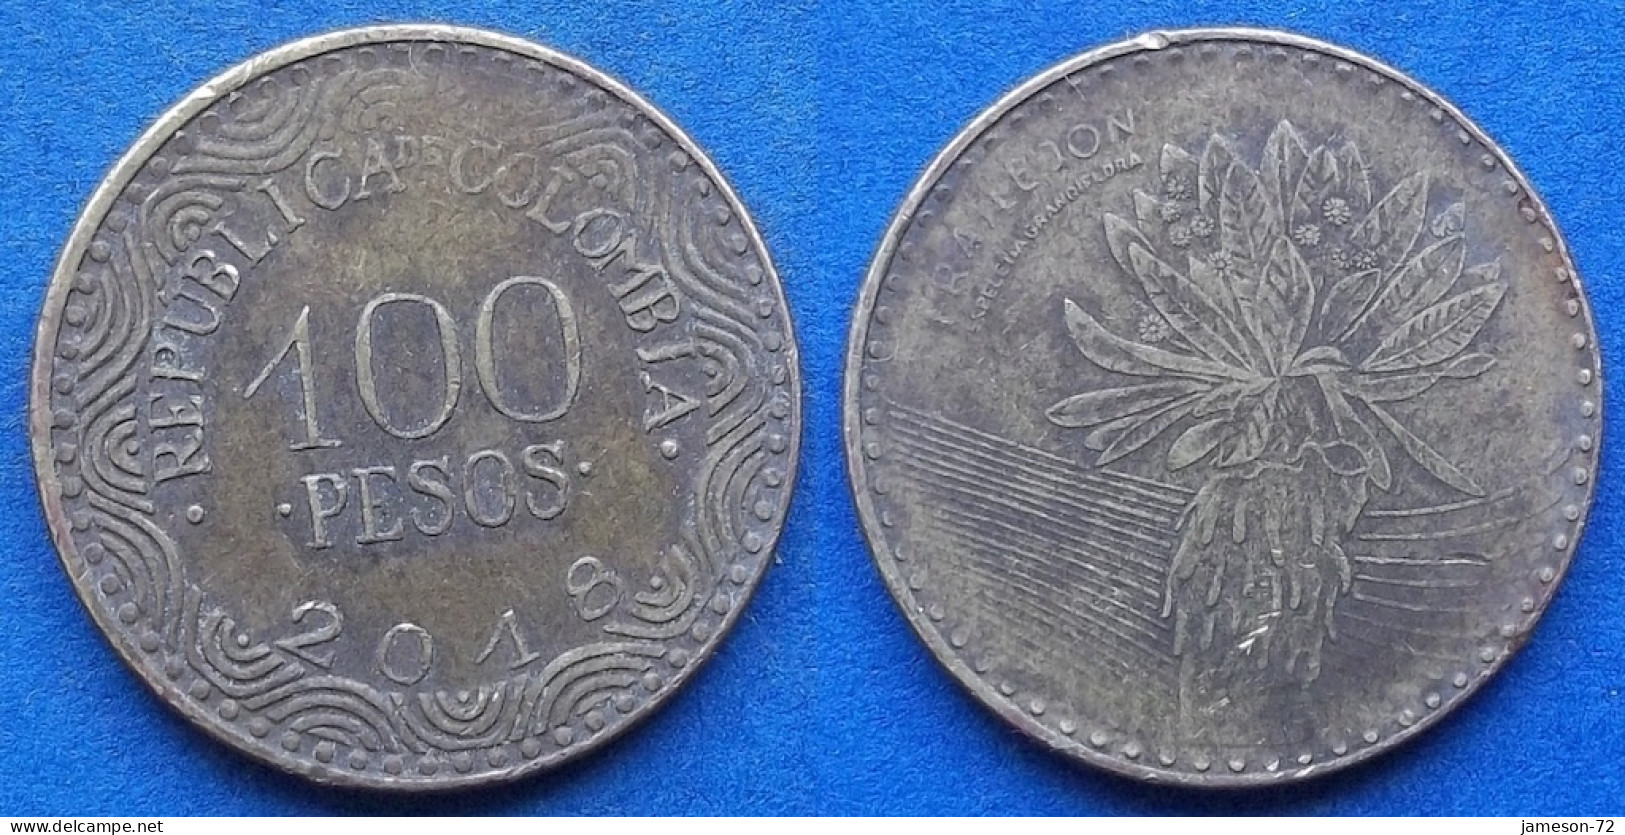 COLOMBIA - 100 Pesos 2018 "Frailejon" KM# 296 Republic - Edelweiss Coins - Colombia